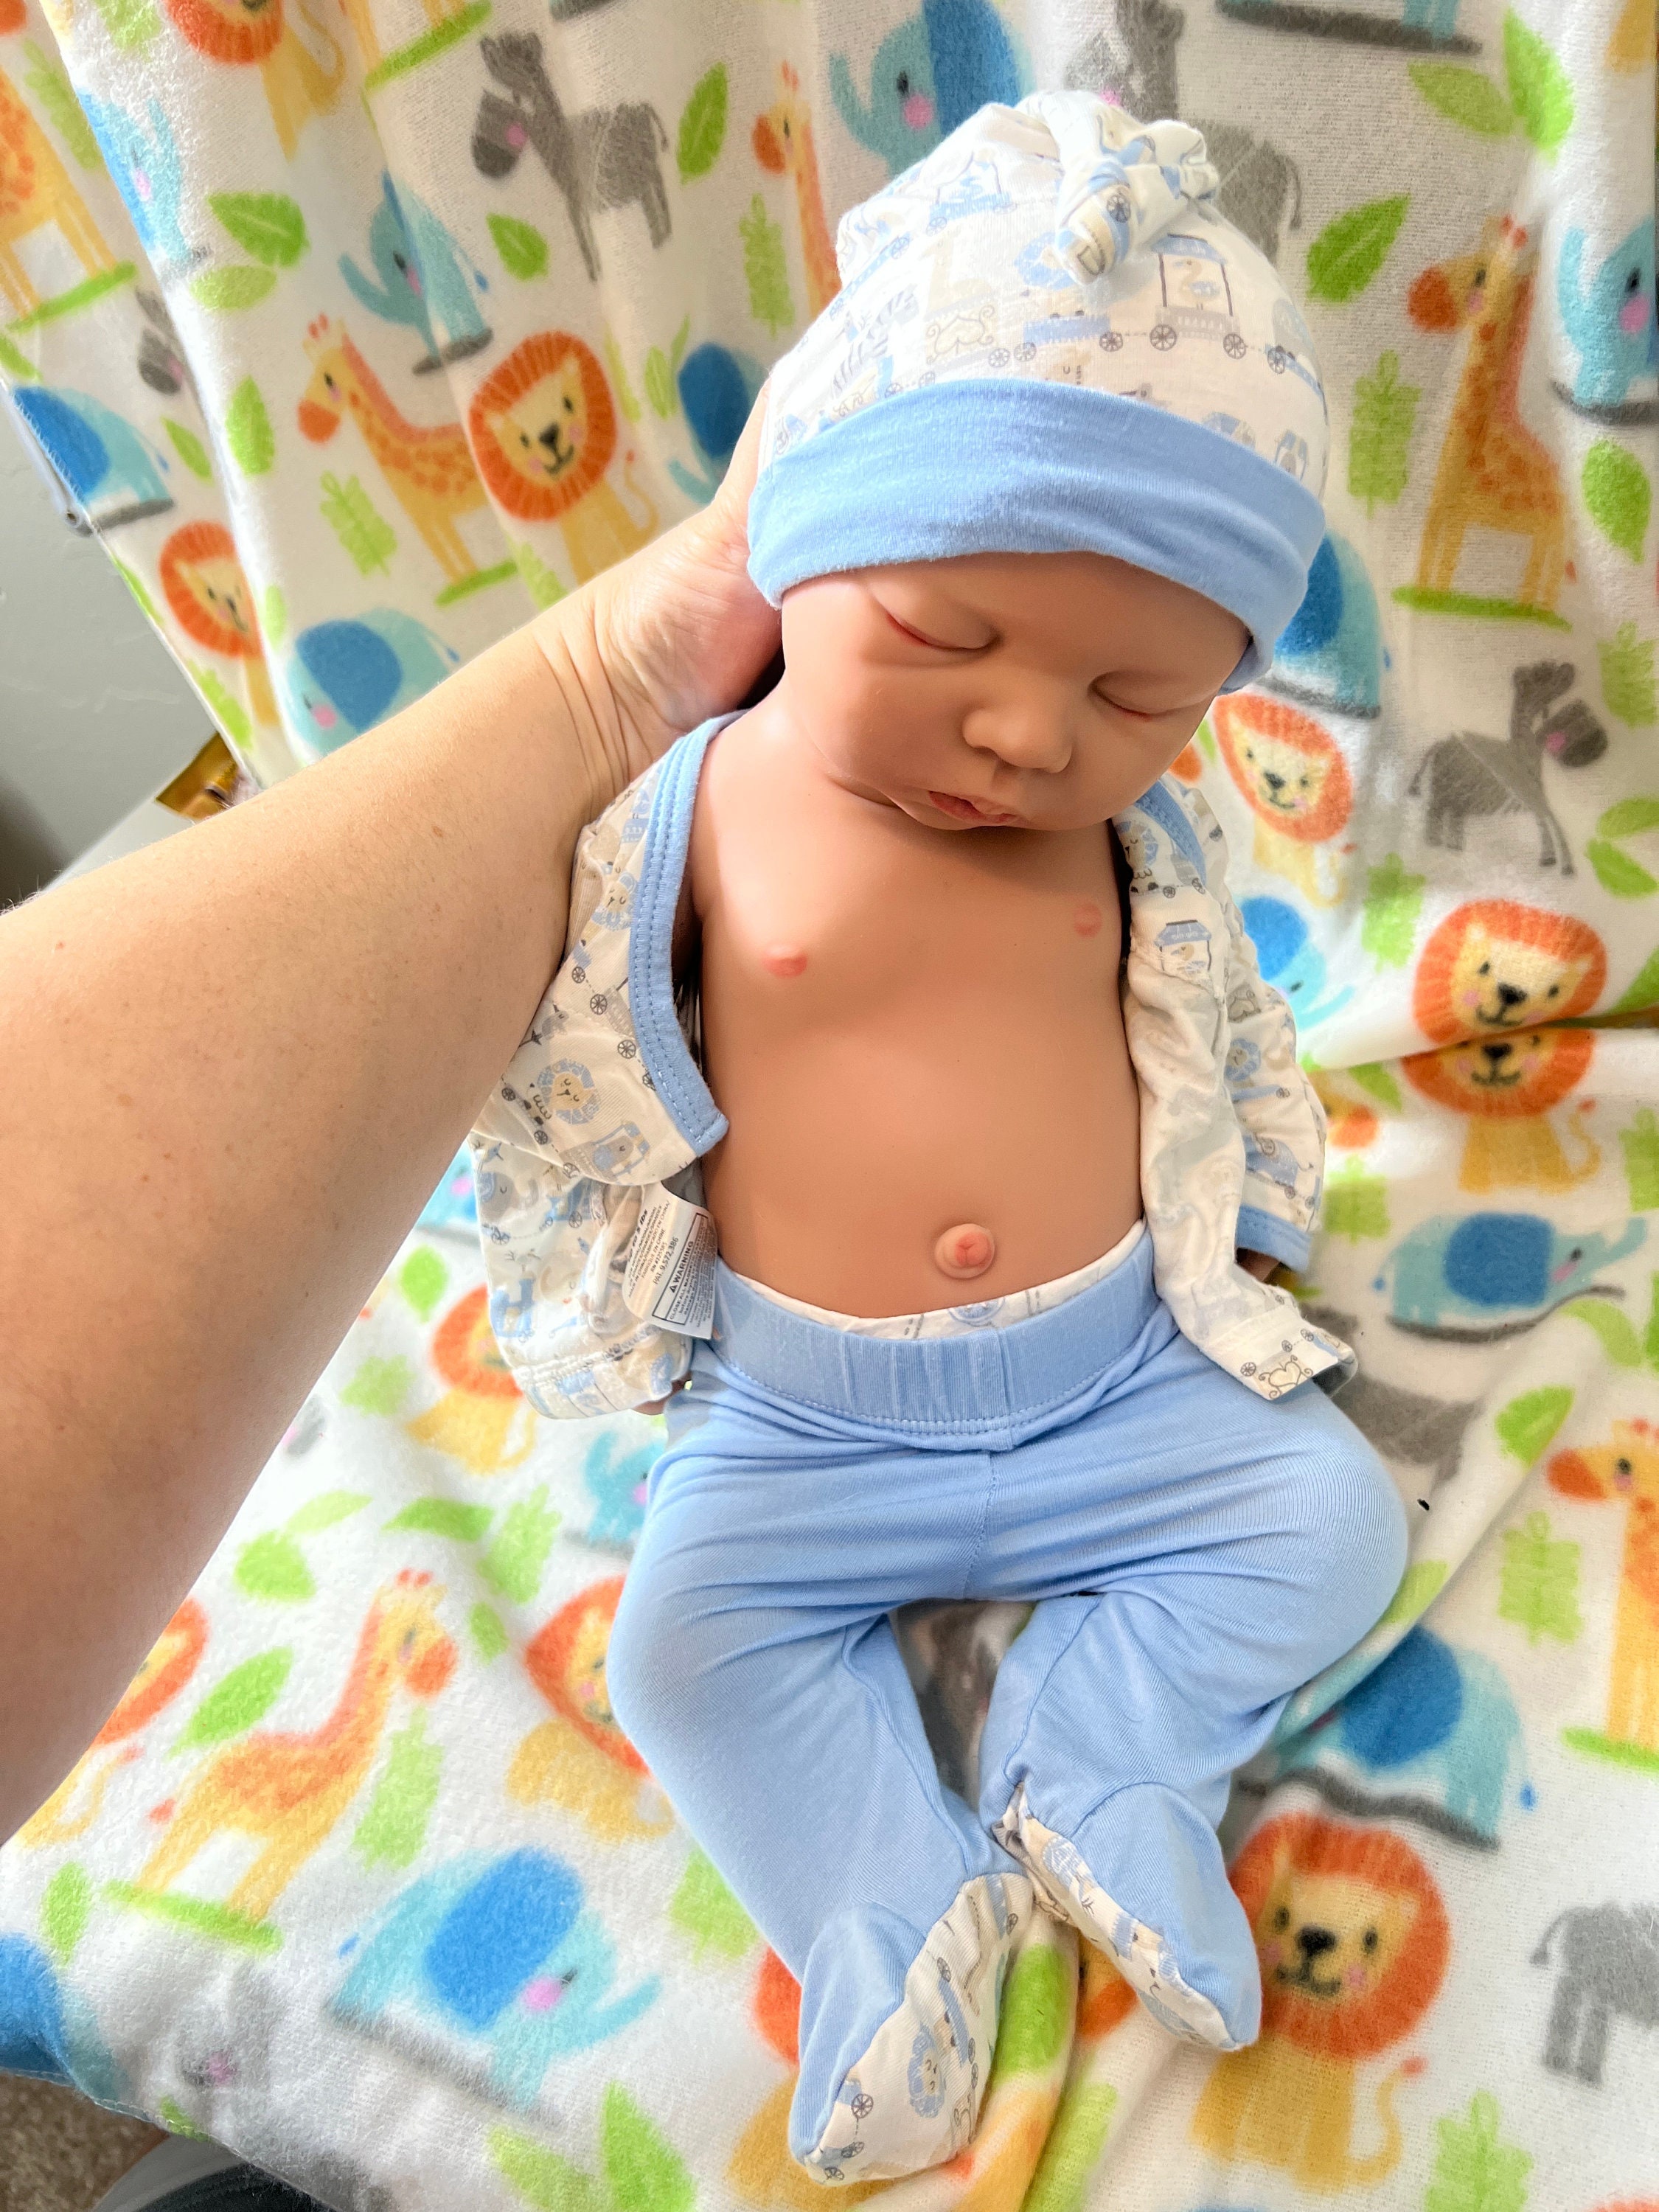 Bebé de silicona de cuerpo completo, LISTO PARA ENVIAR, usa ropa de recién  nacido -  España